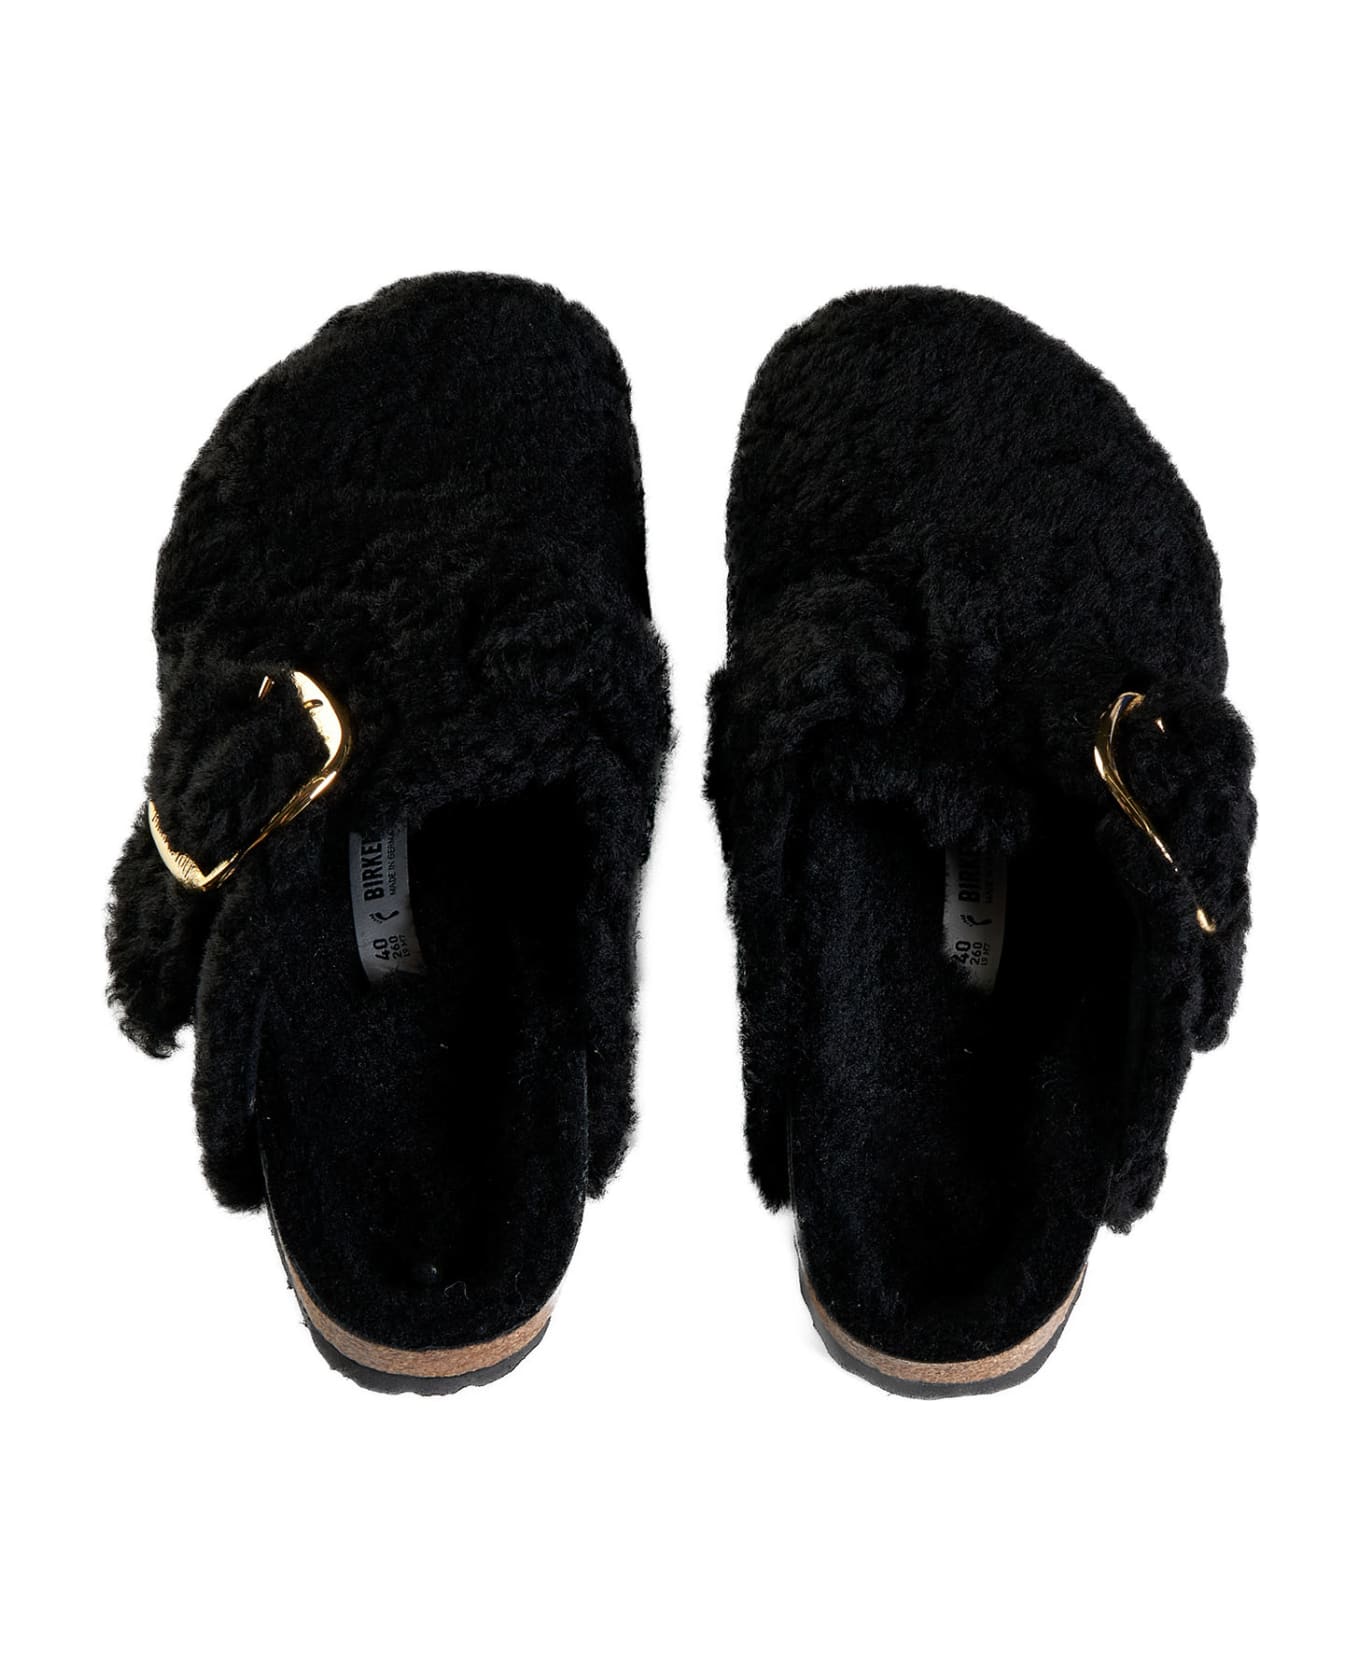 Birkenstock Sandals - Black gold